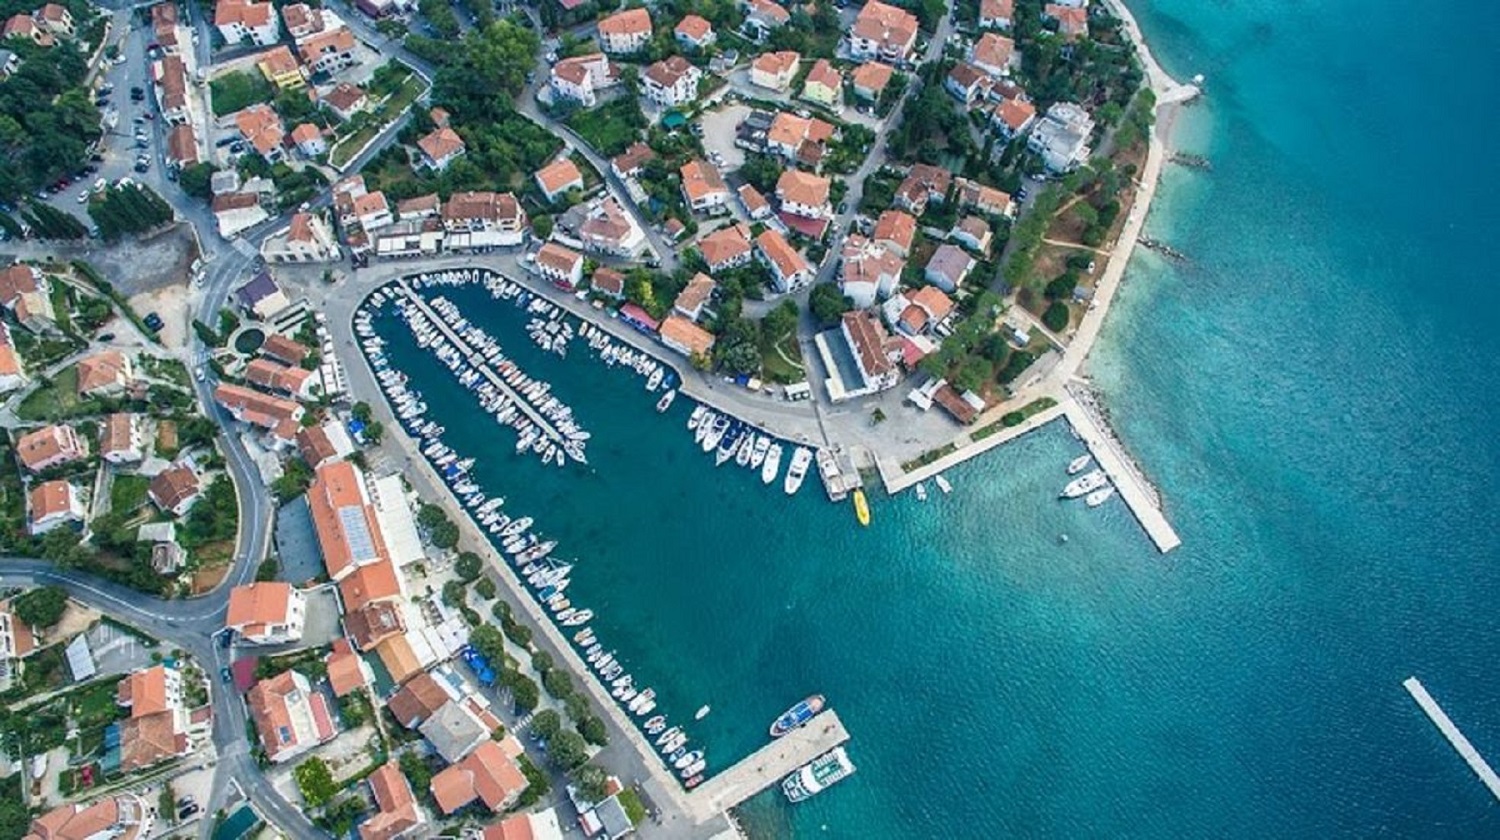 Holiday villa with pool in Croatia, Malinska from a bird's eye view